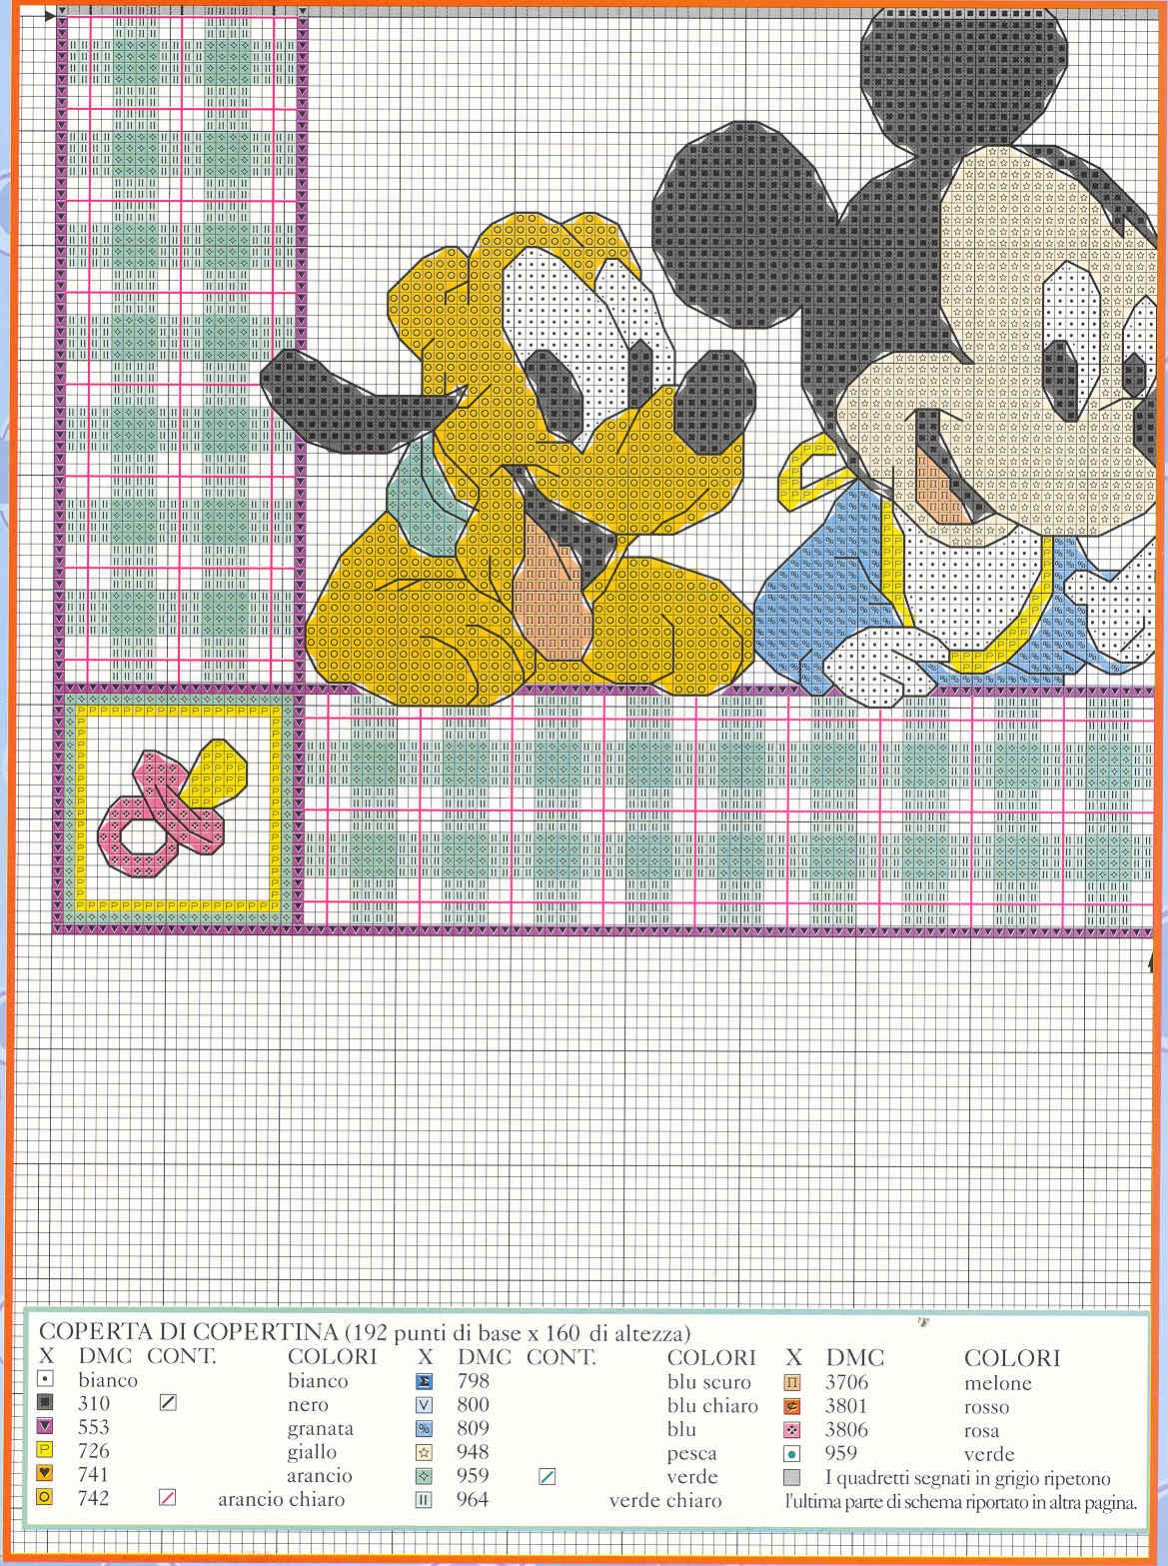 Cross stitch baby blanket with Disney babies (3)